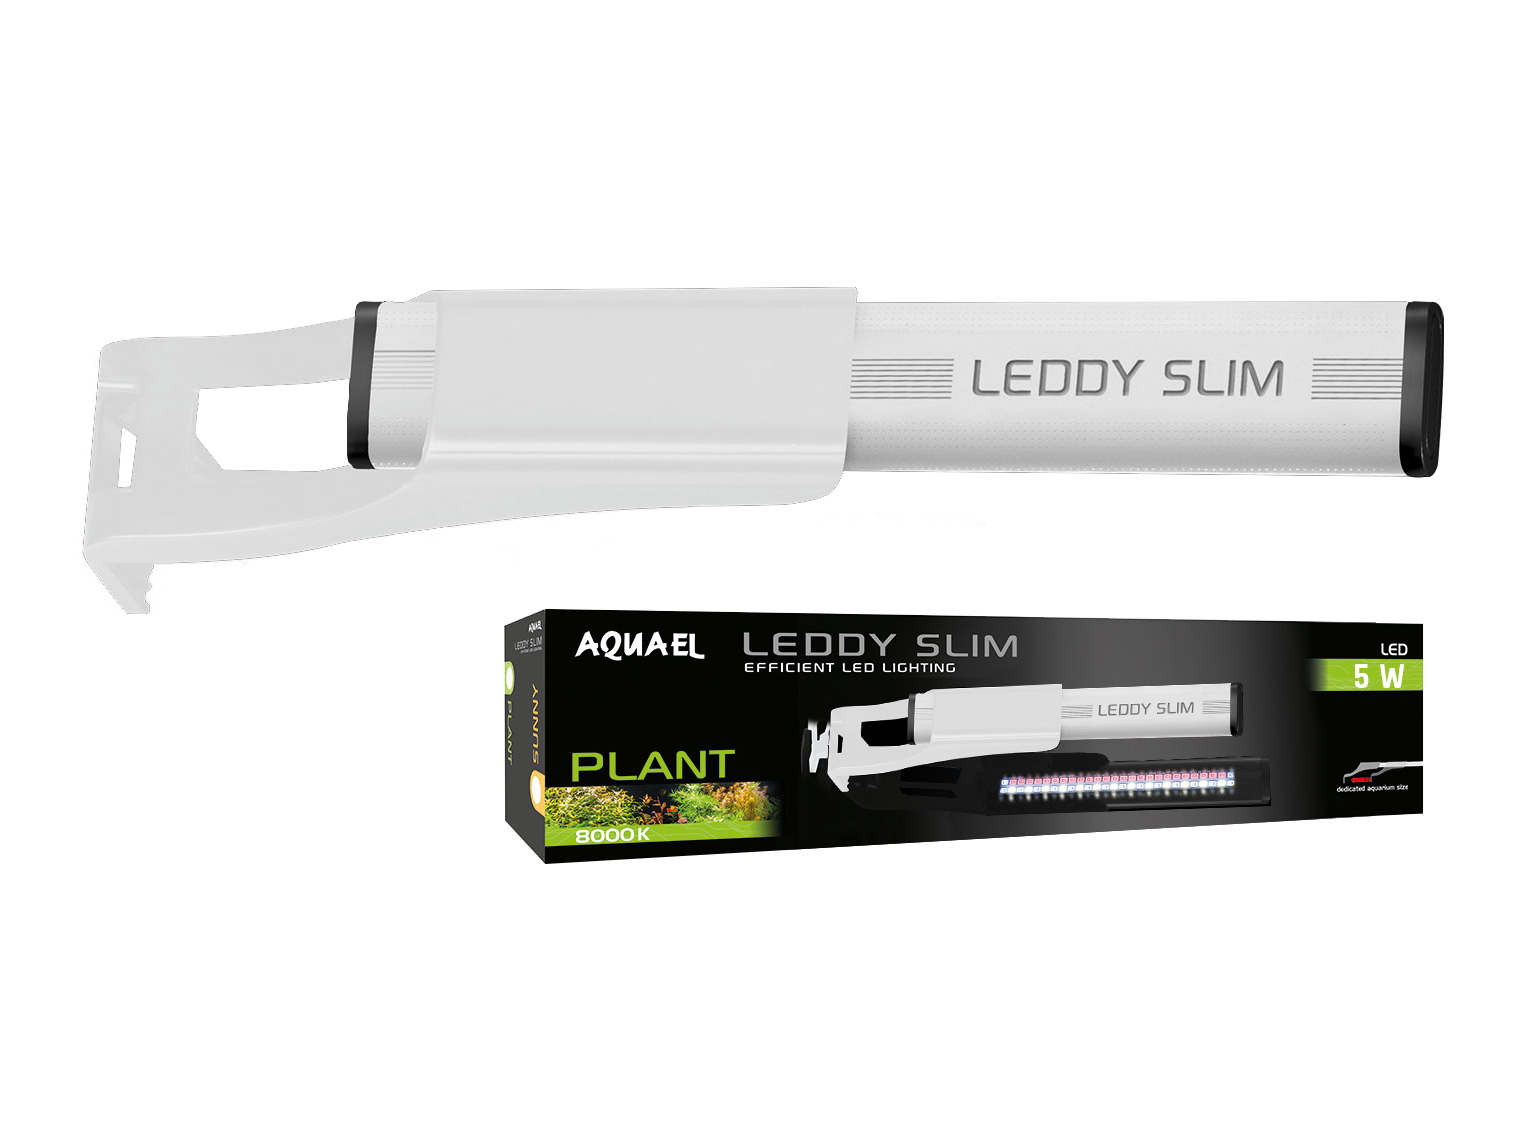 Aquael LEDDY SLIM PLANT 5W